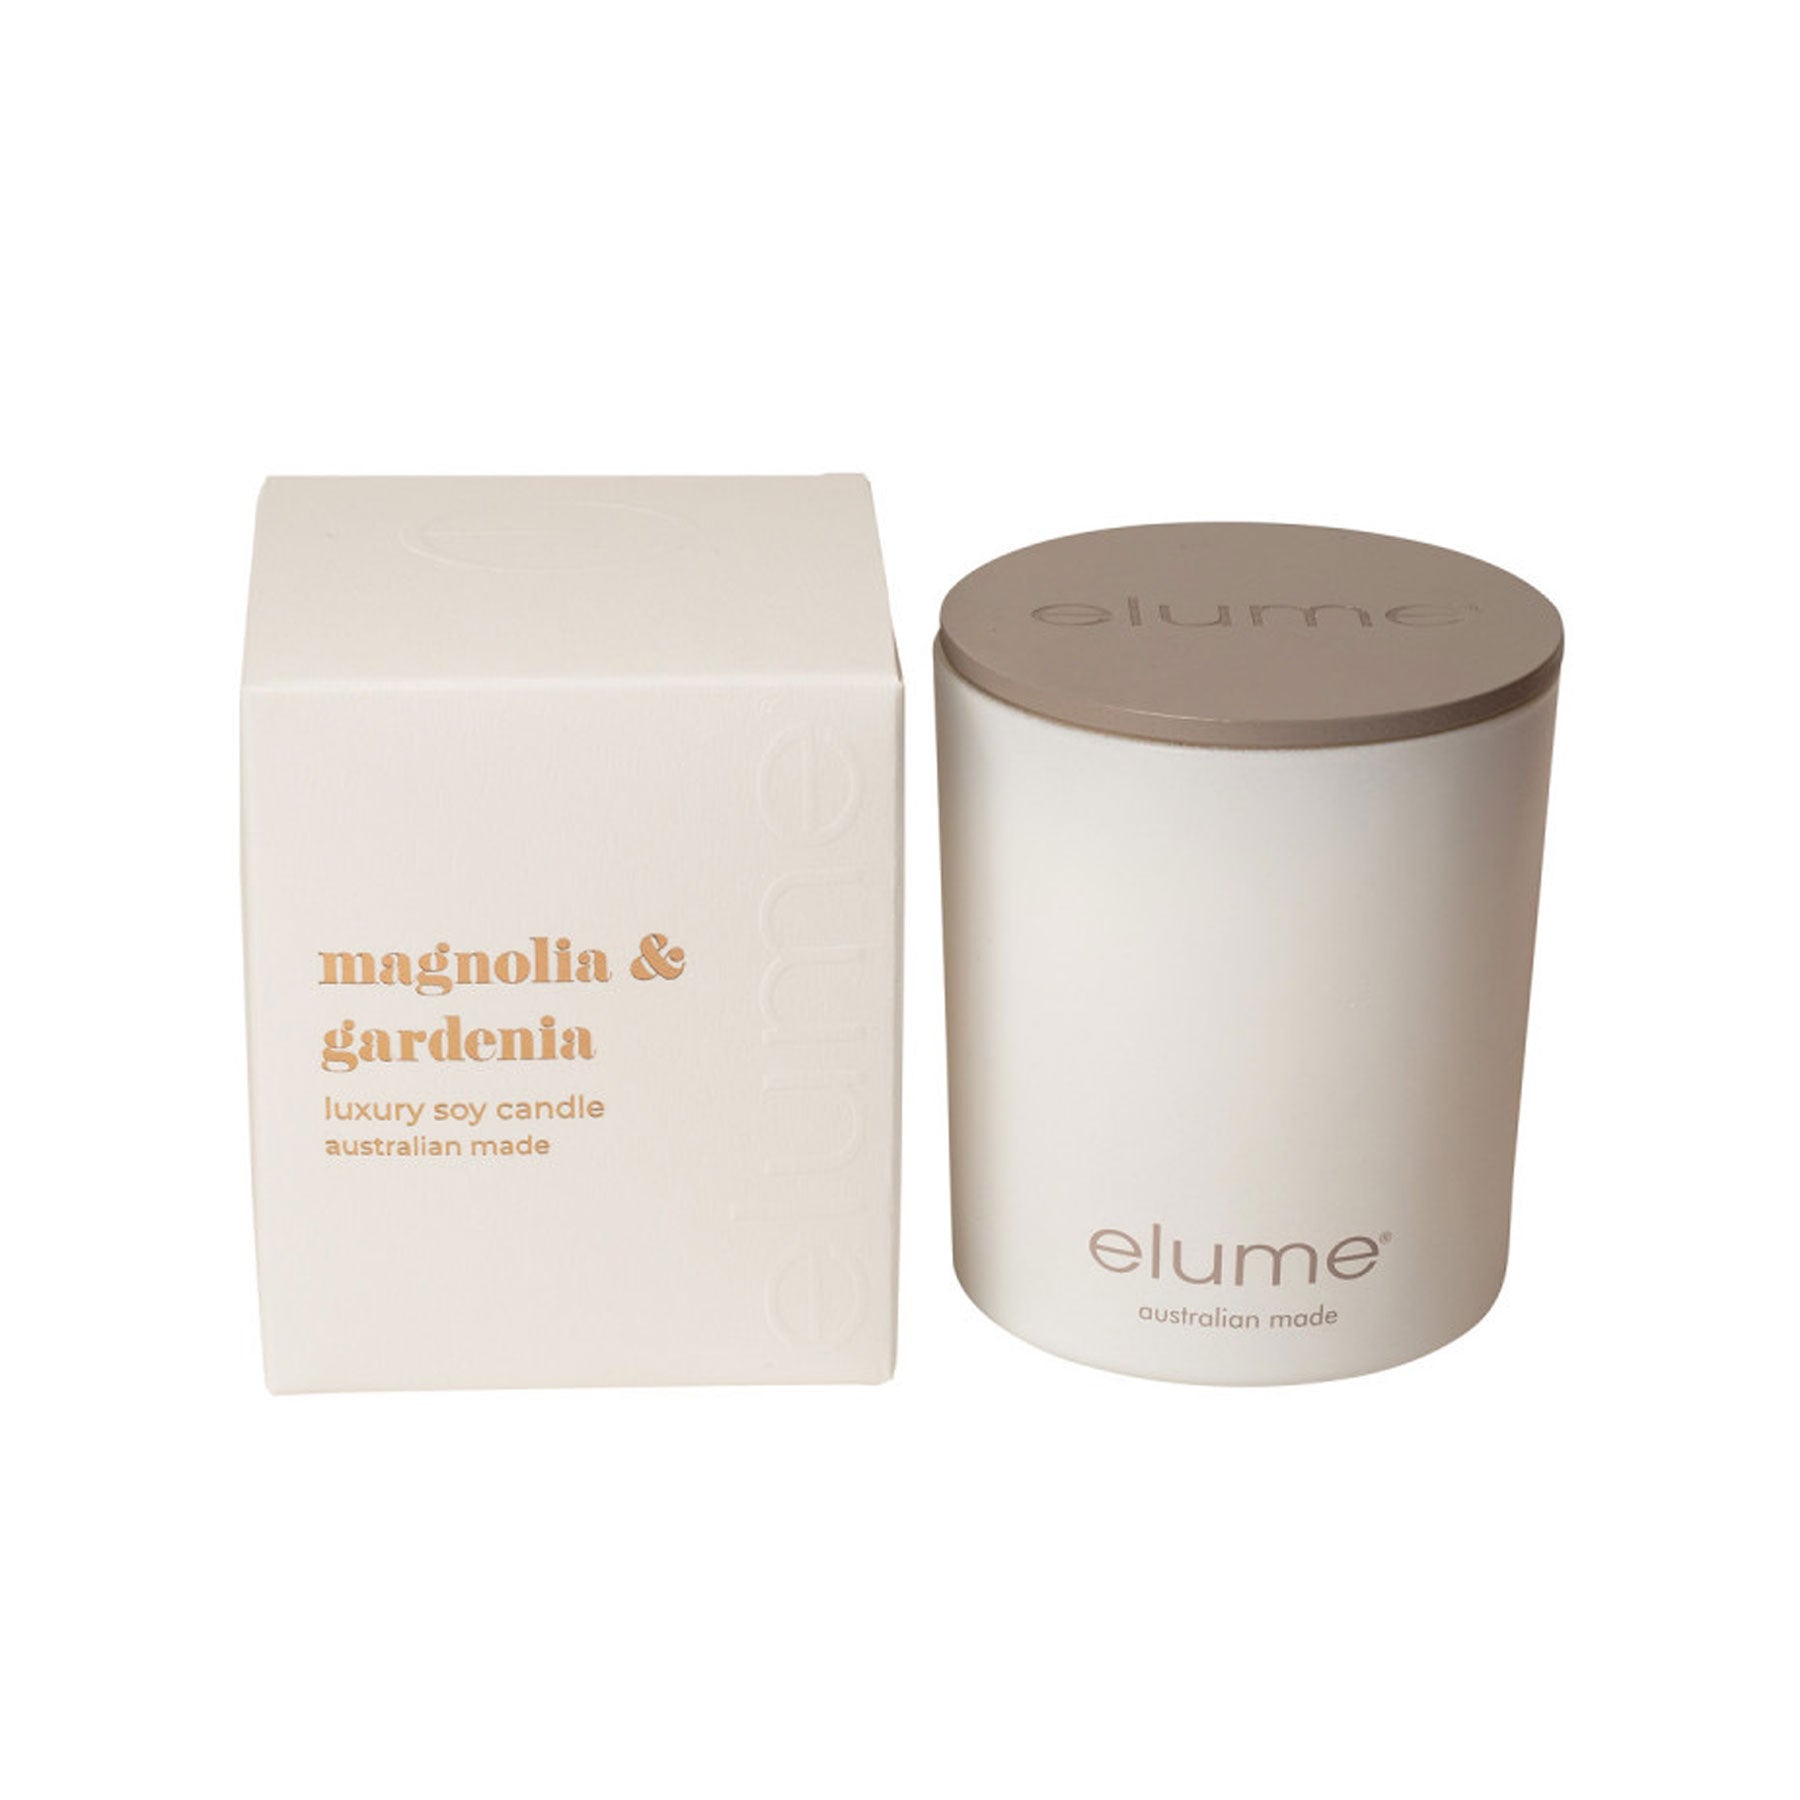 Magnolia & Gardenia: Elume Luxury Soy Candle